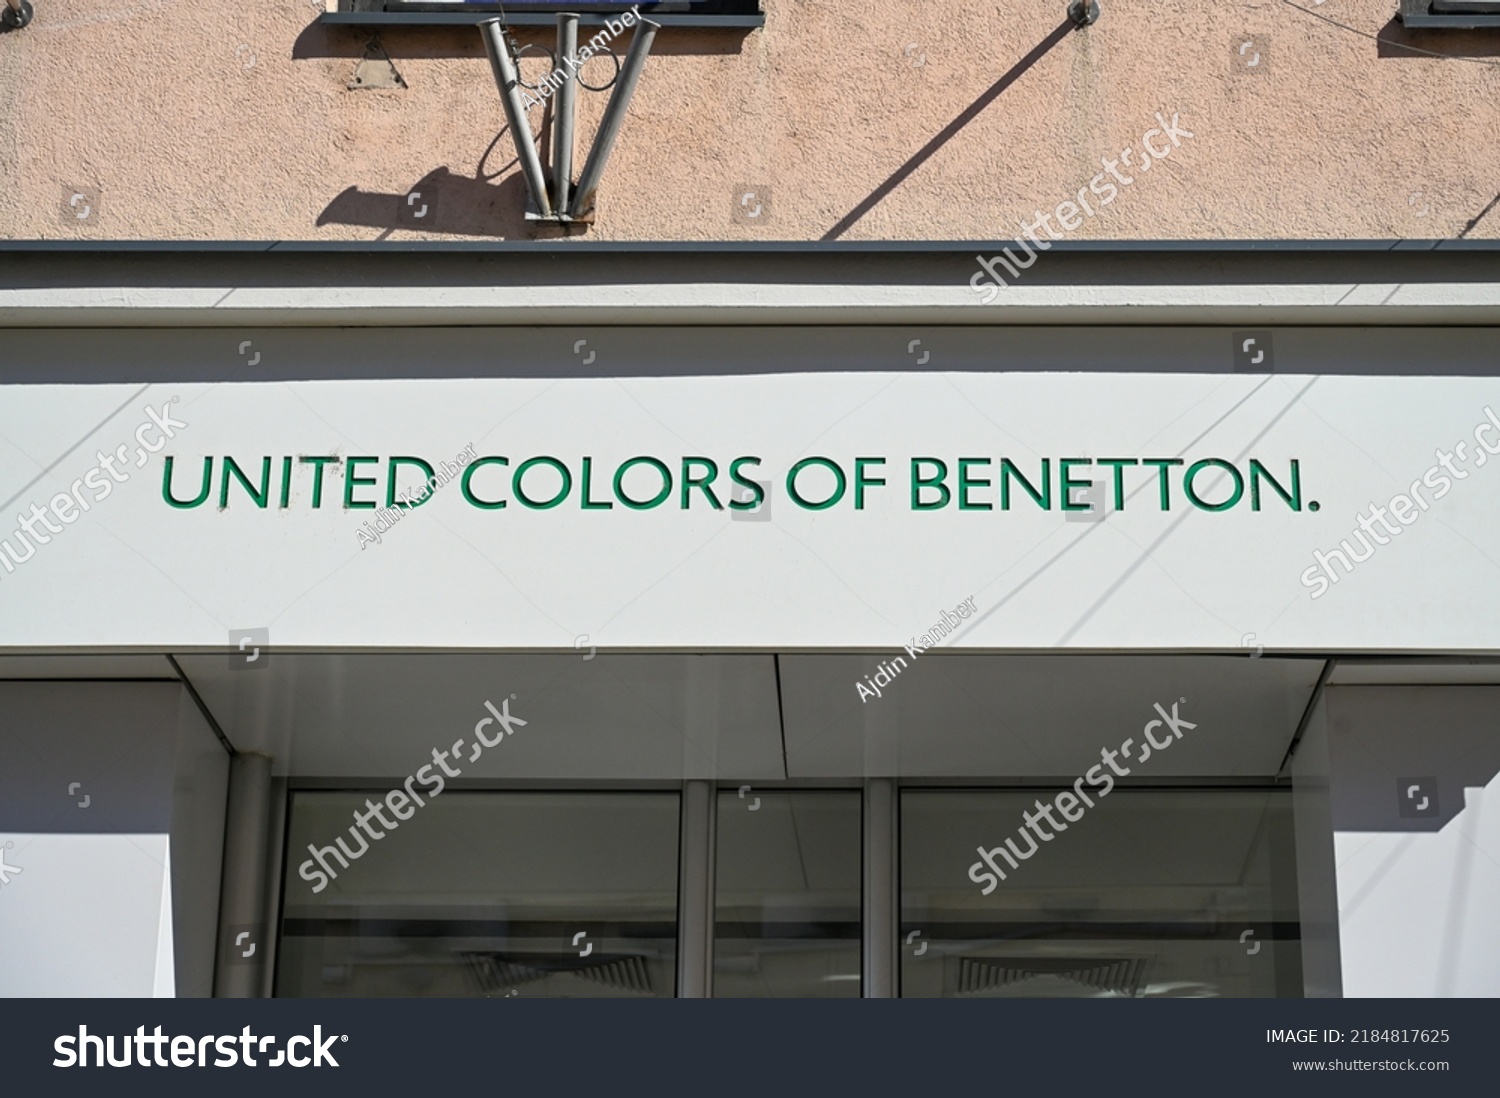 166 Benetton Logo Images, Stock Photos & Vectors | Shutterstock